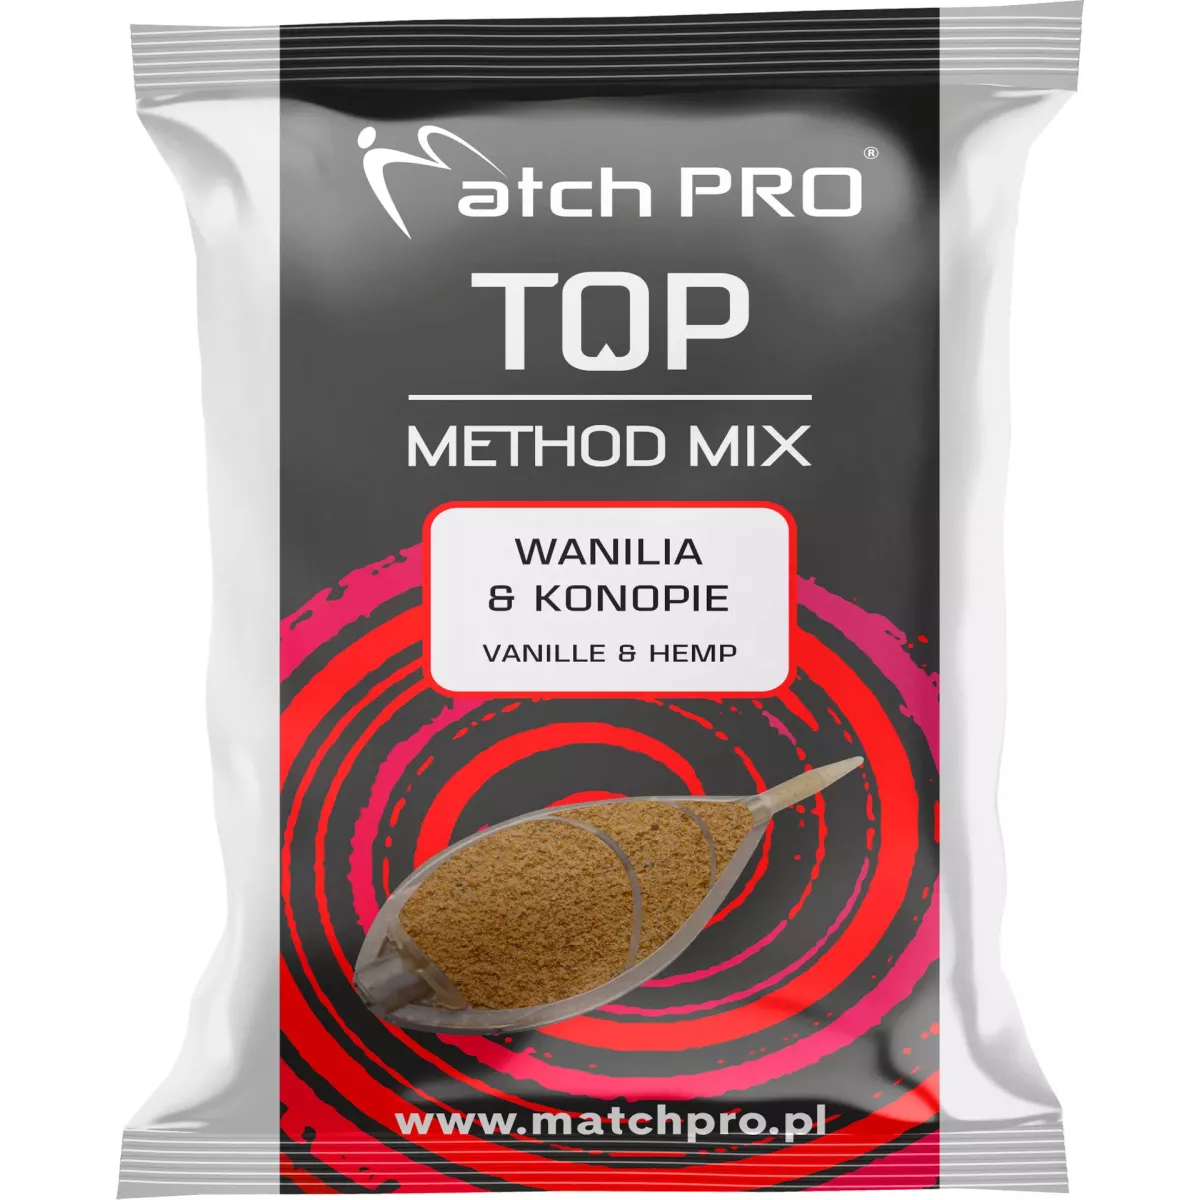 Zanęta MatchPro Method Mix TOP 700g - WANILIA & KONOPIE